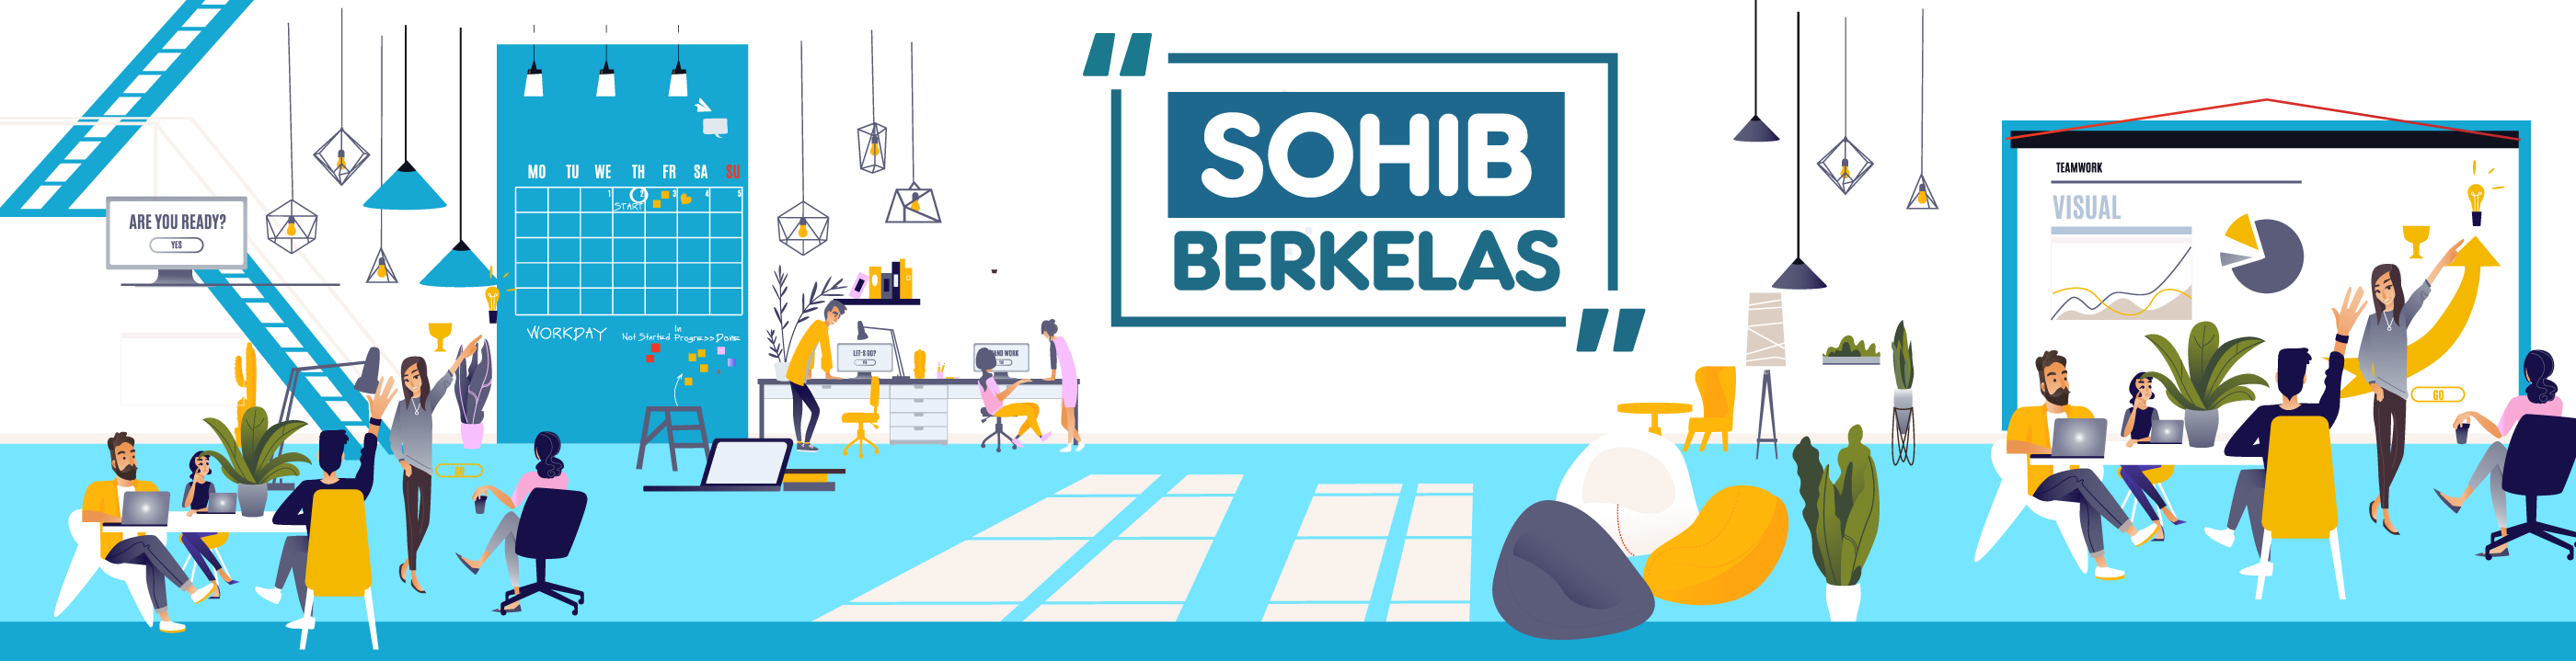 SohIB Berkelas Pekanbaru 2018_banner_1535445255_sohib_offline.png